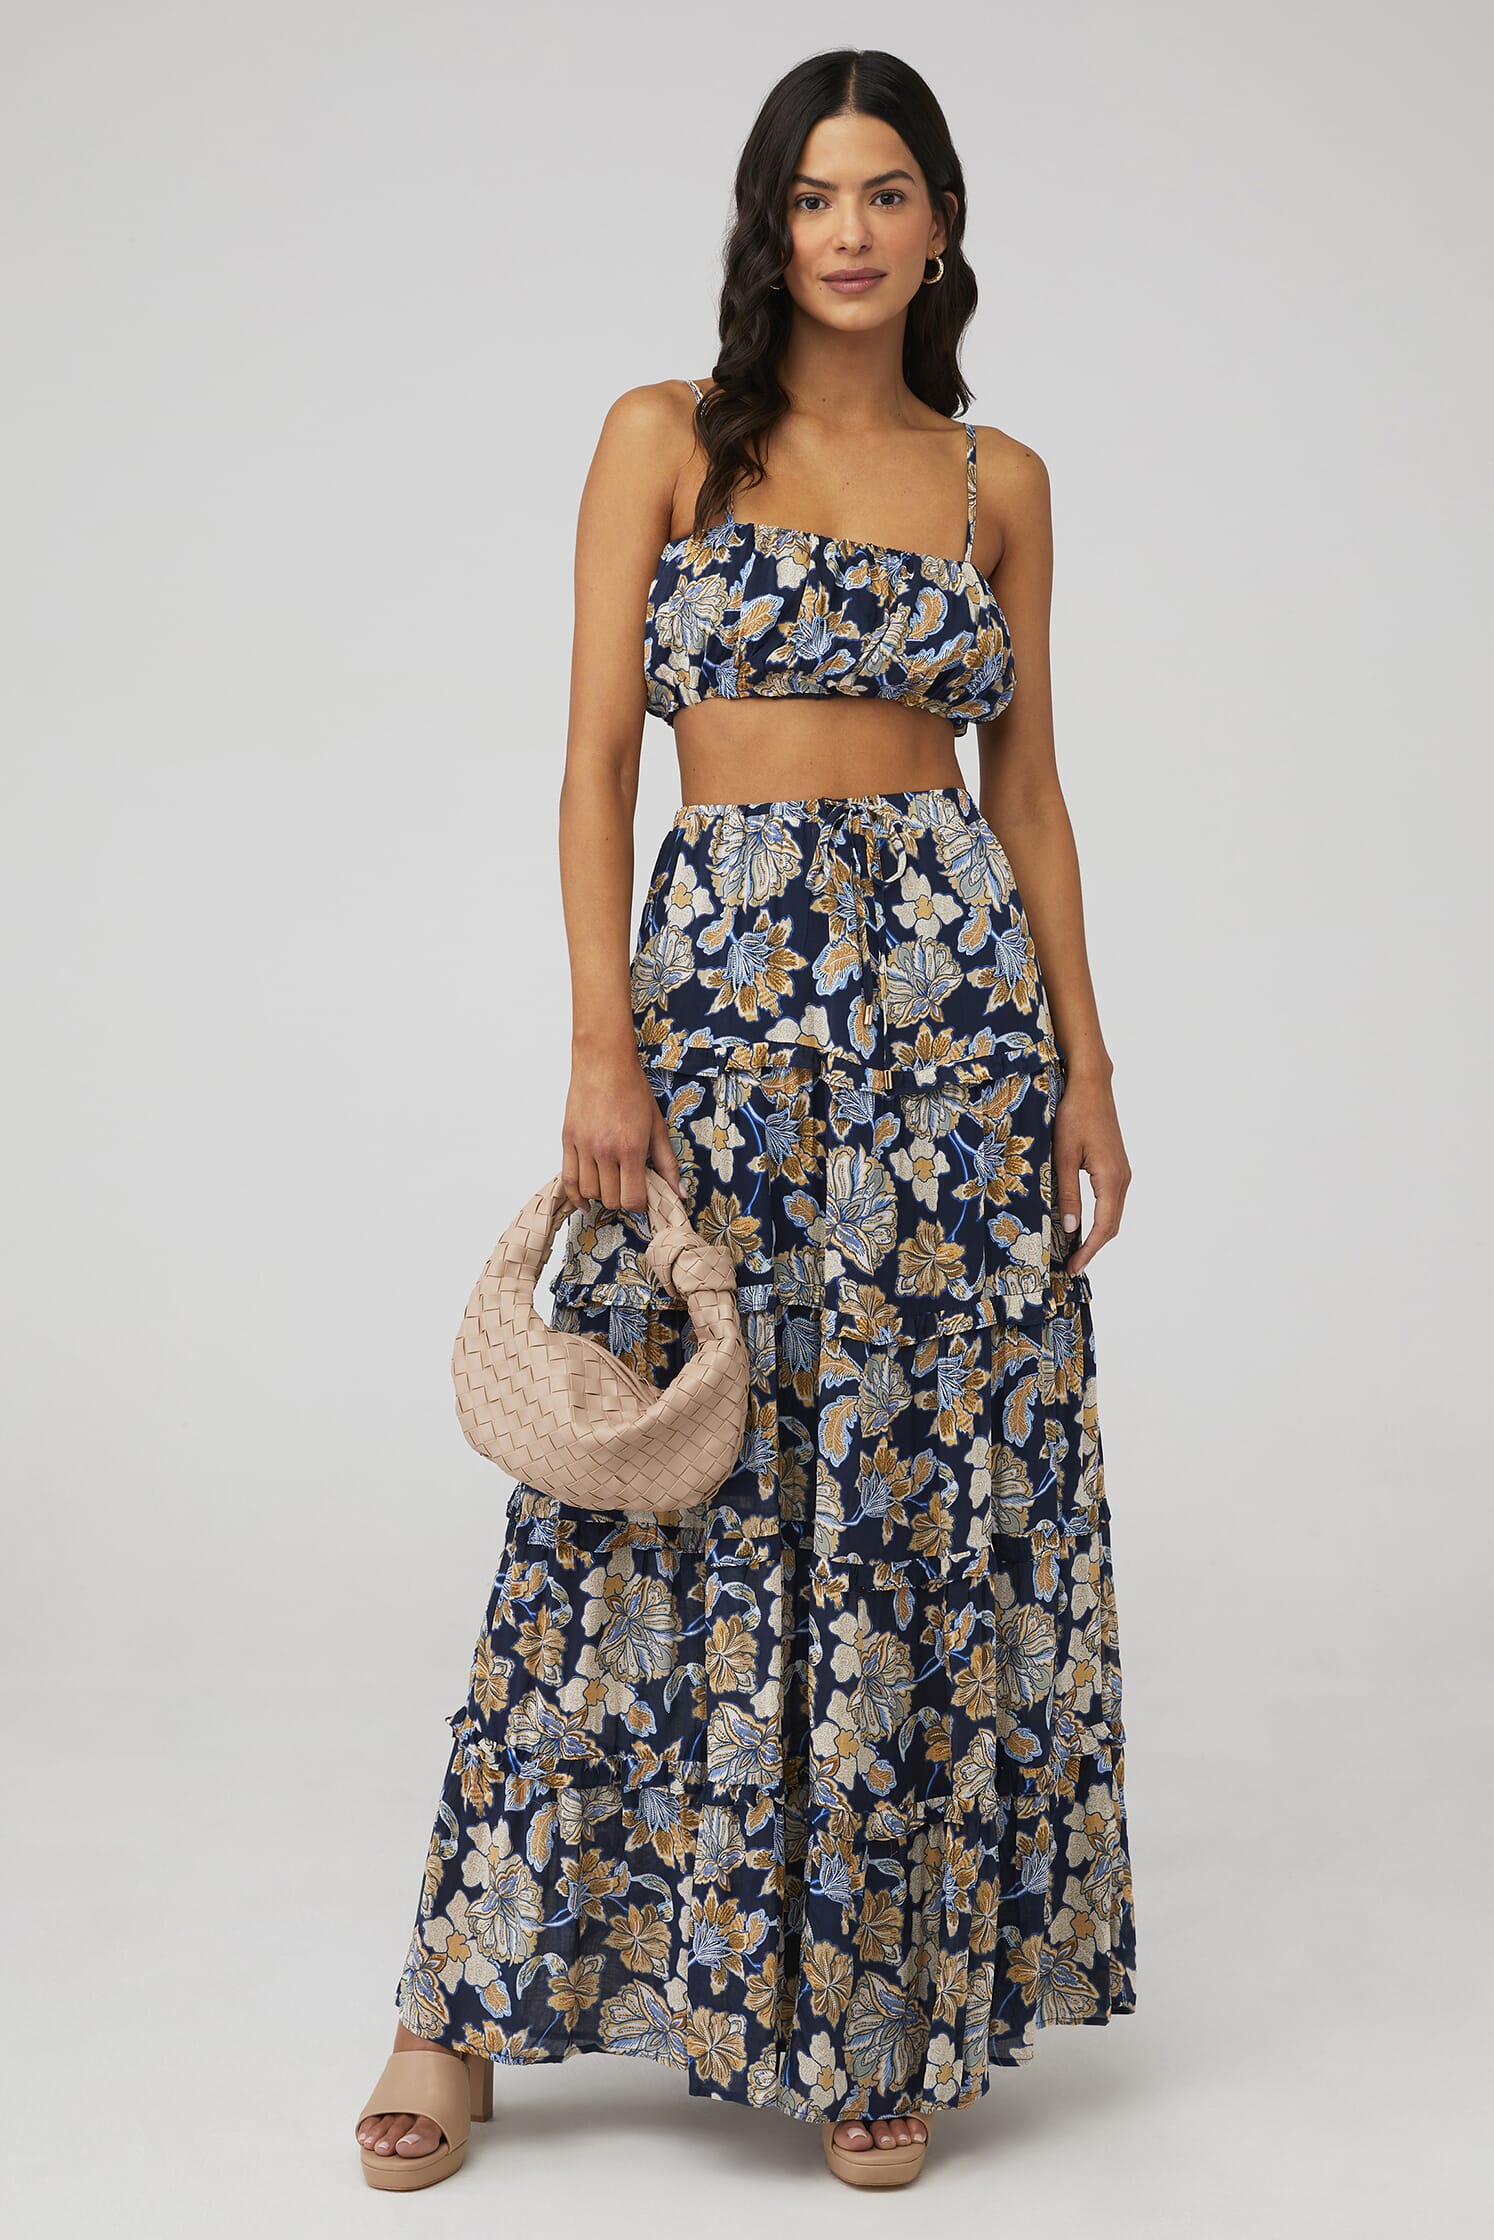 MINKPINK | Quinn Maxi Skirt in Navy Floral| FashionPass